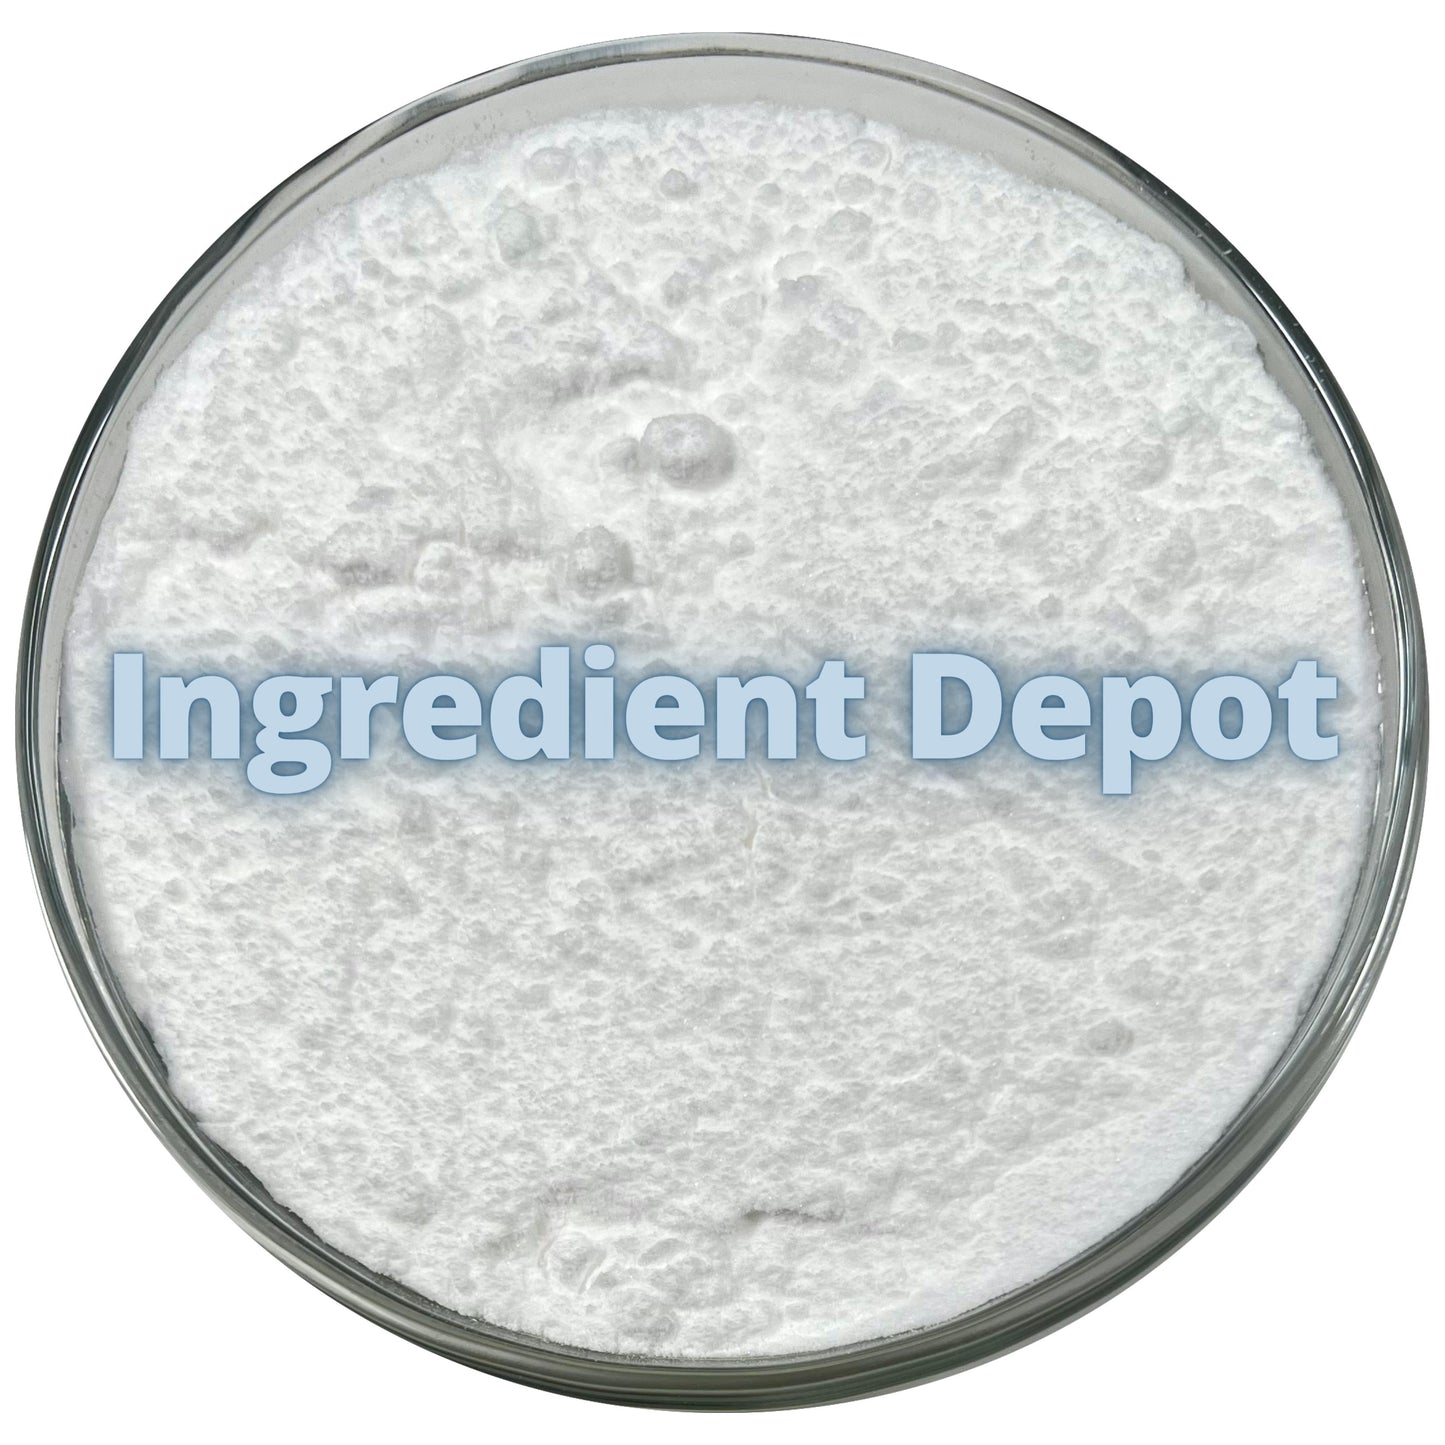 Creatine Monohydrate USP Grade 8 kgs - IngredientDepot.com